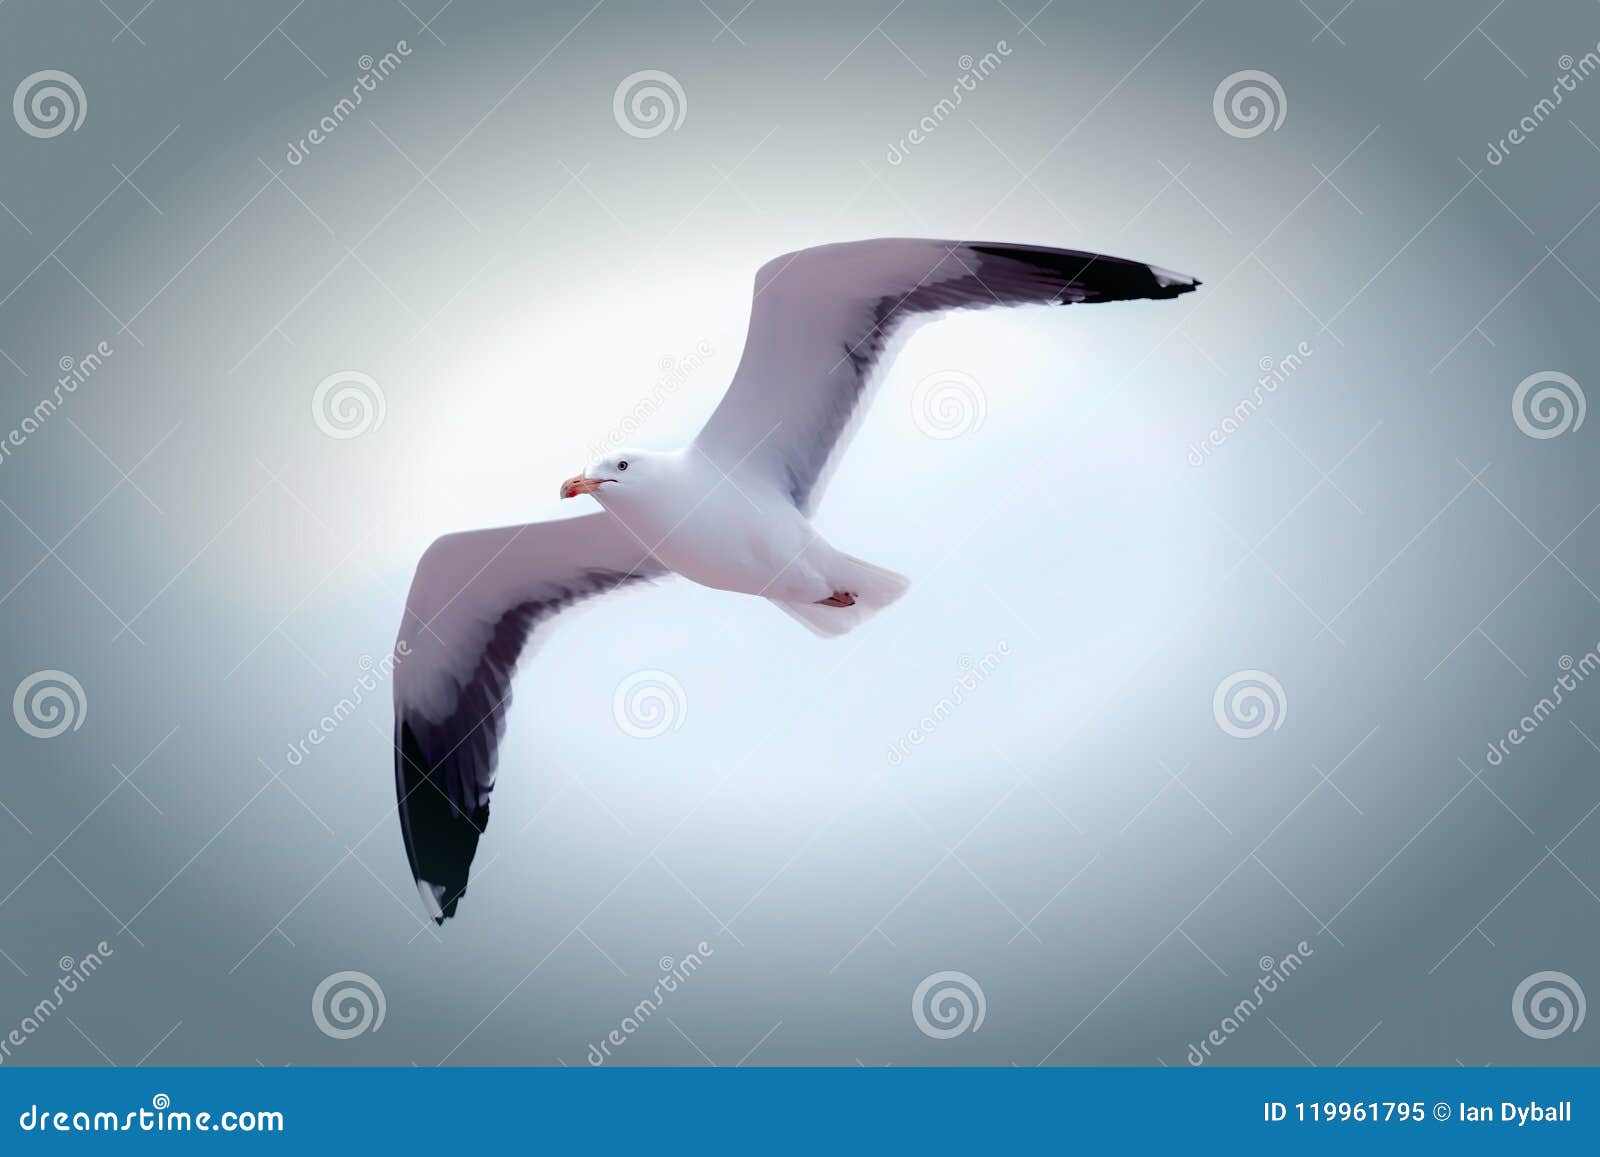 freedom. serene white seagull flying. beautiful sea bird gliding